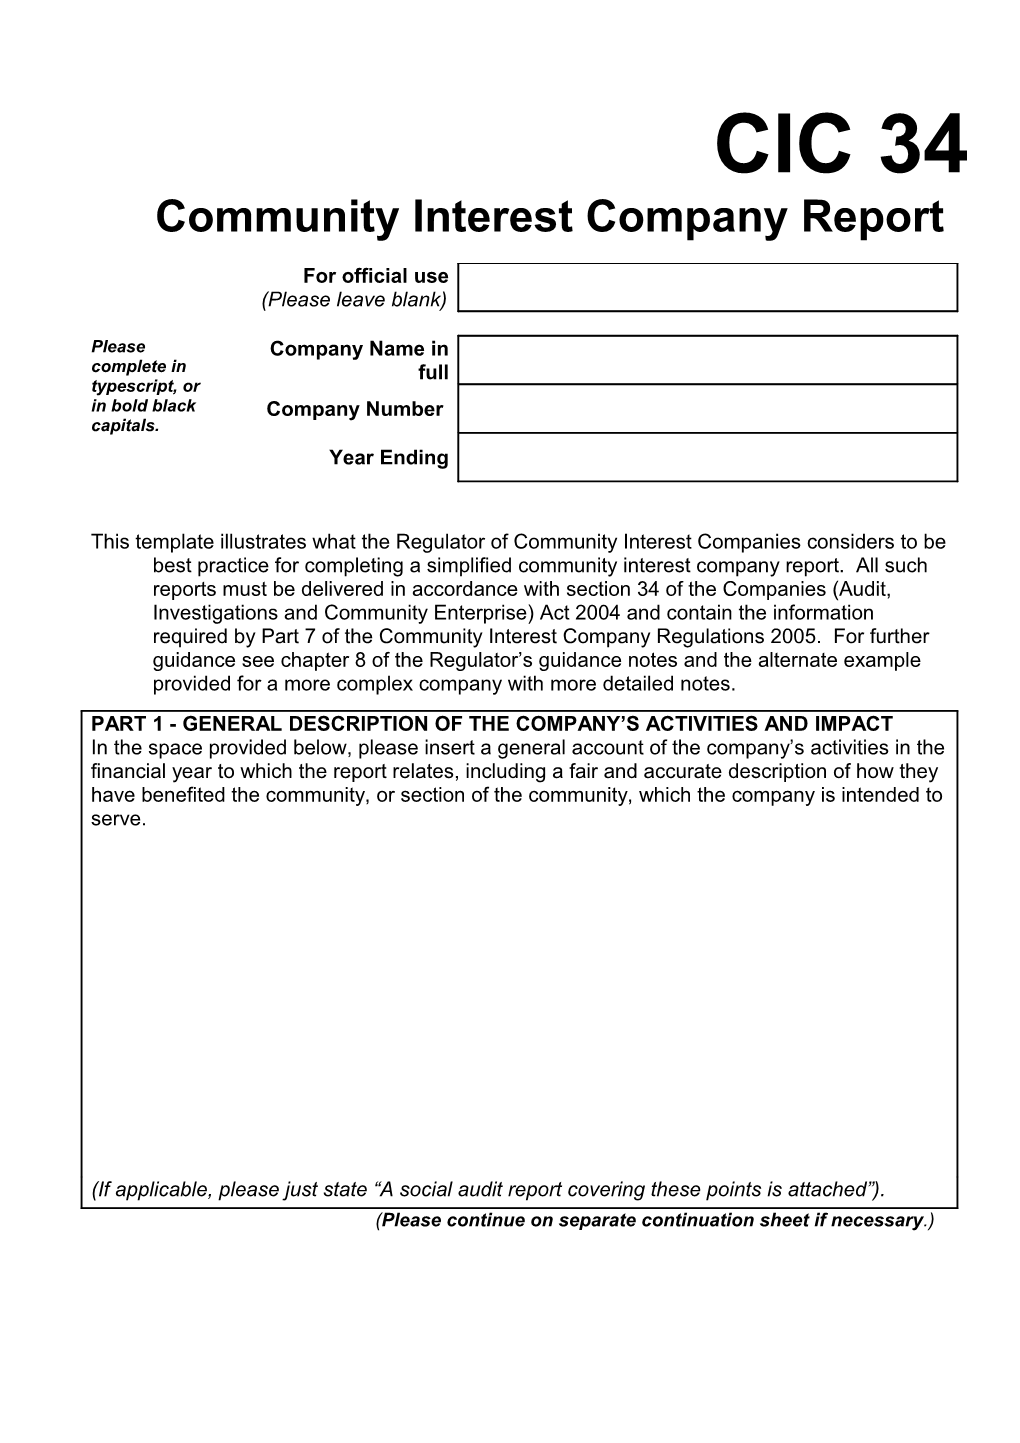 Community Interest Company Report